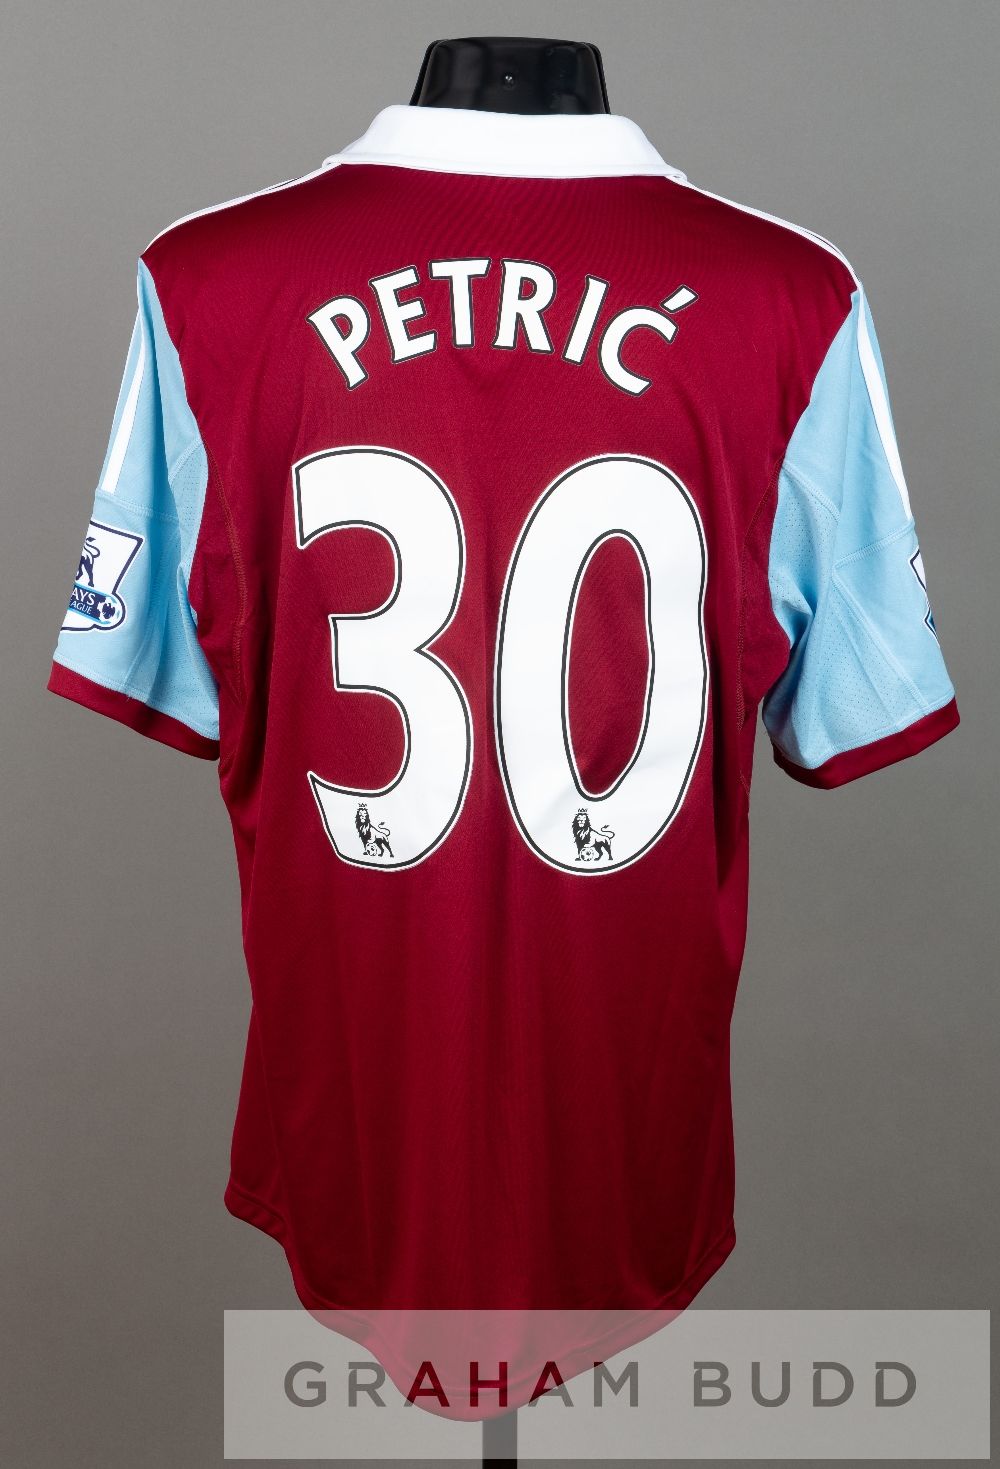 Mladen Petric claret and blue West Ham United no.30 Poppy home jersey v Aston Villa at Upton Park, - Image 2 of 2